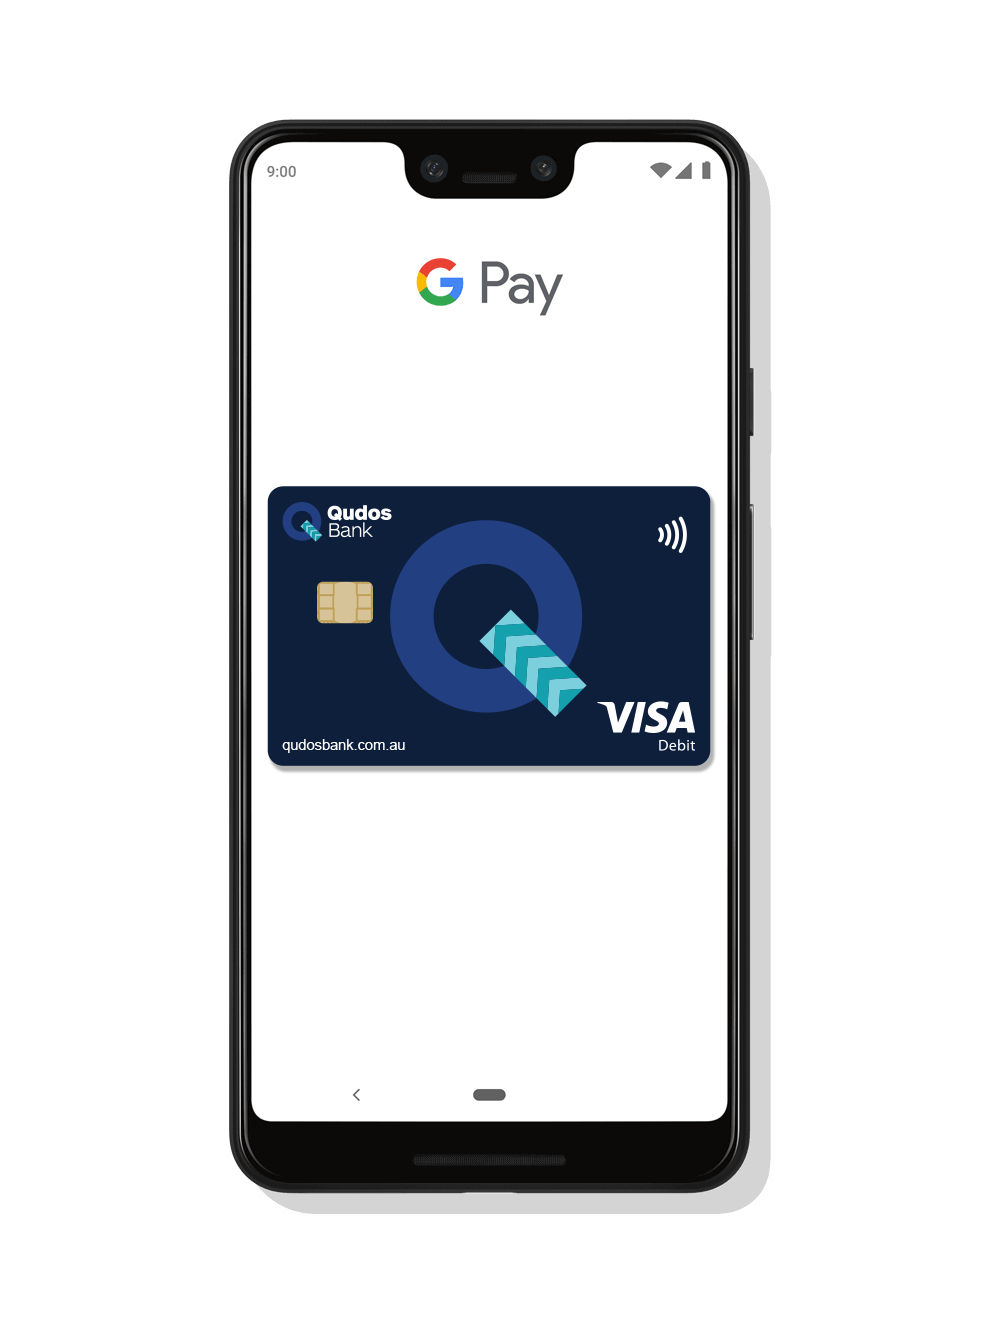 Google phone showing Google Pay with Qudos Bank Visa Debit Card